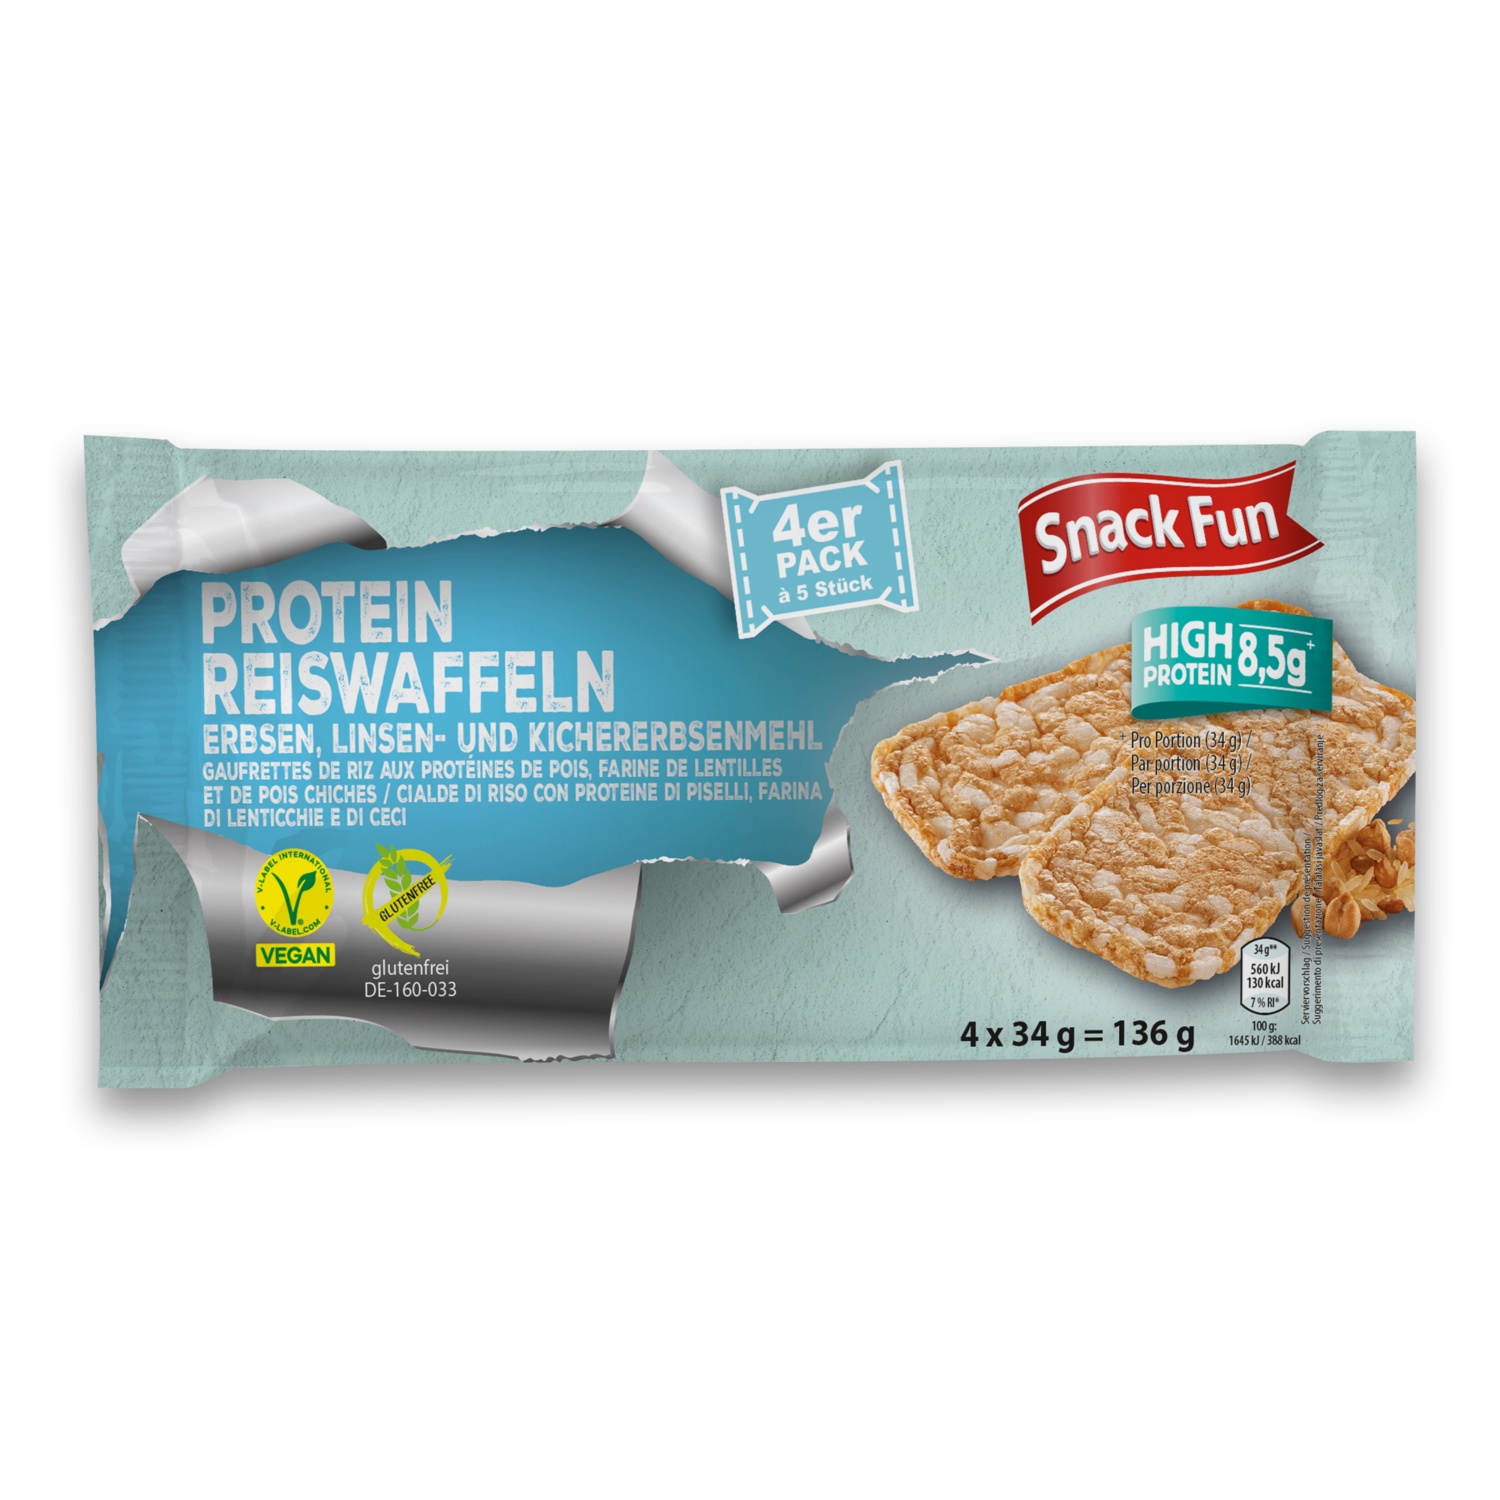 SNACK FUN Protein Reis-/Maiswaffeln, Kichererbsen